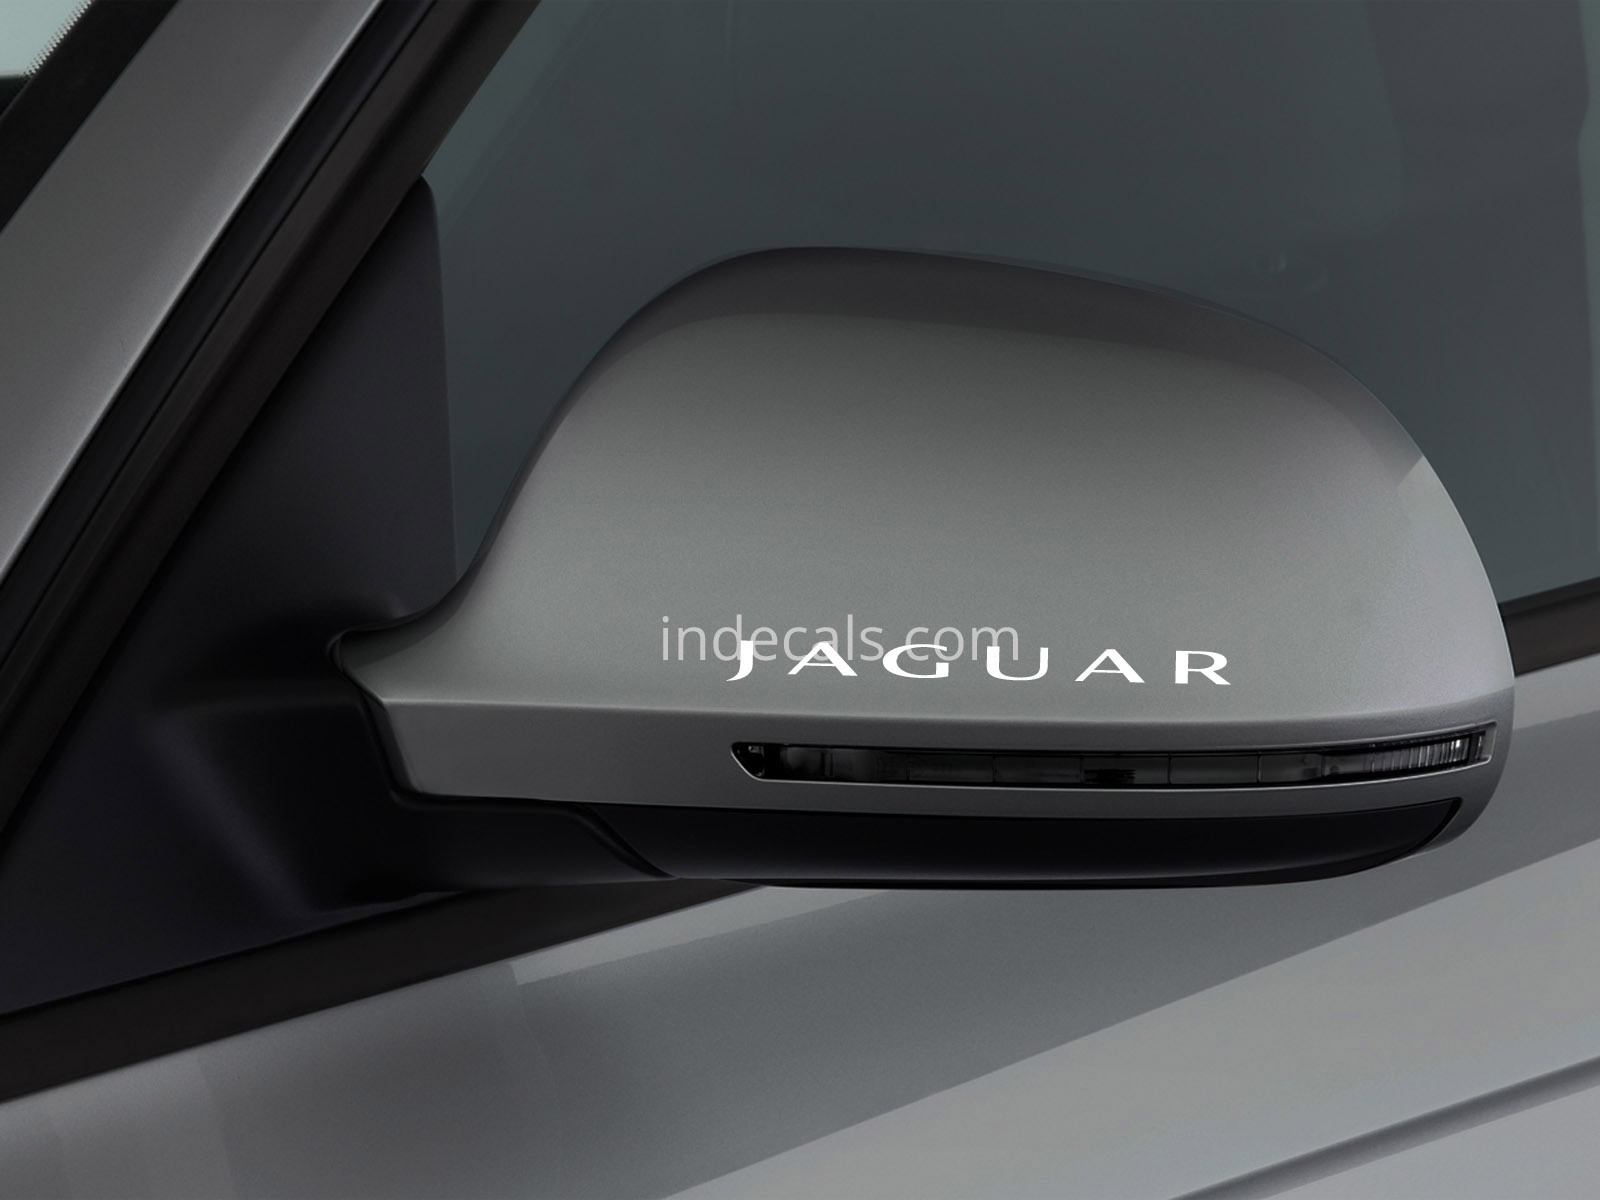 3 x Jaguar Stickers for Mirror - White